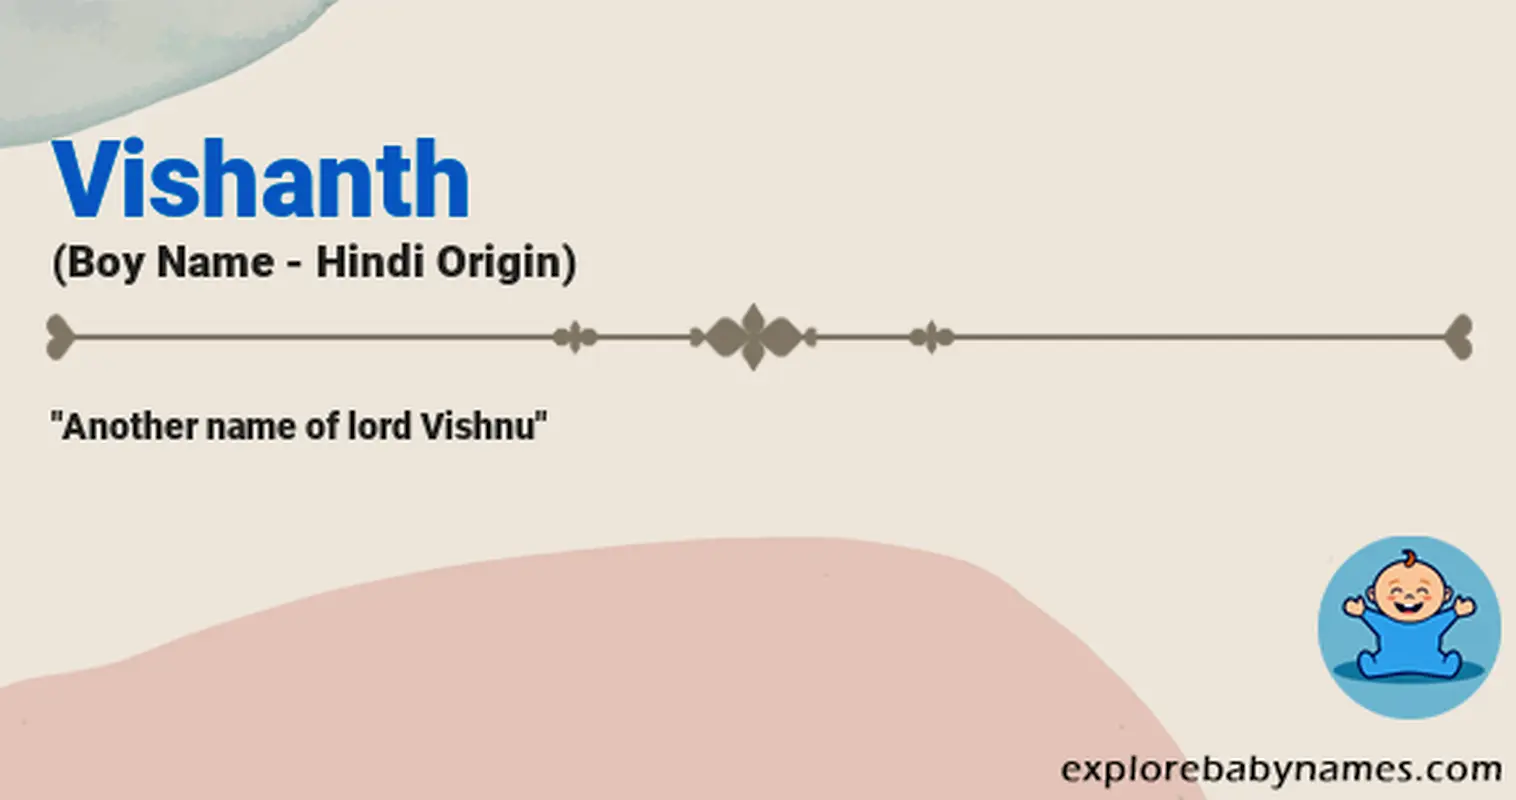 Meaning of Vishanth